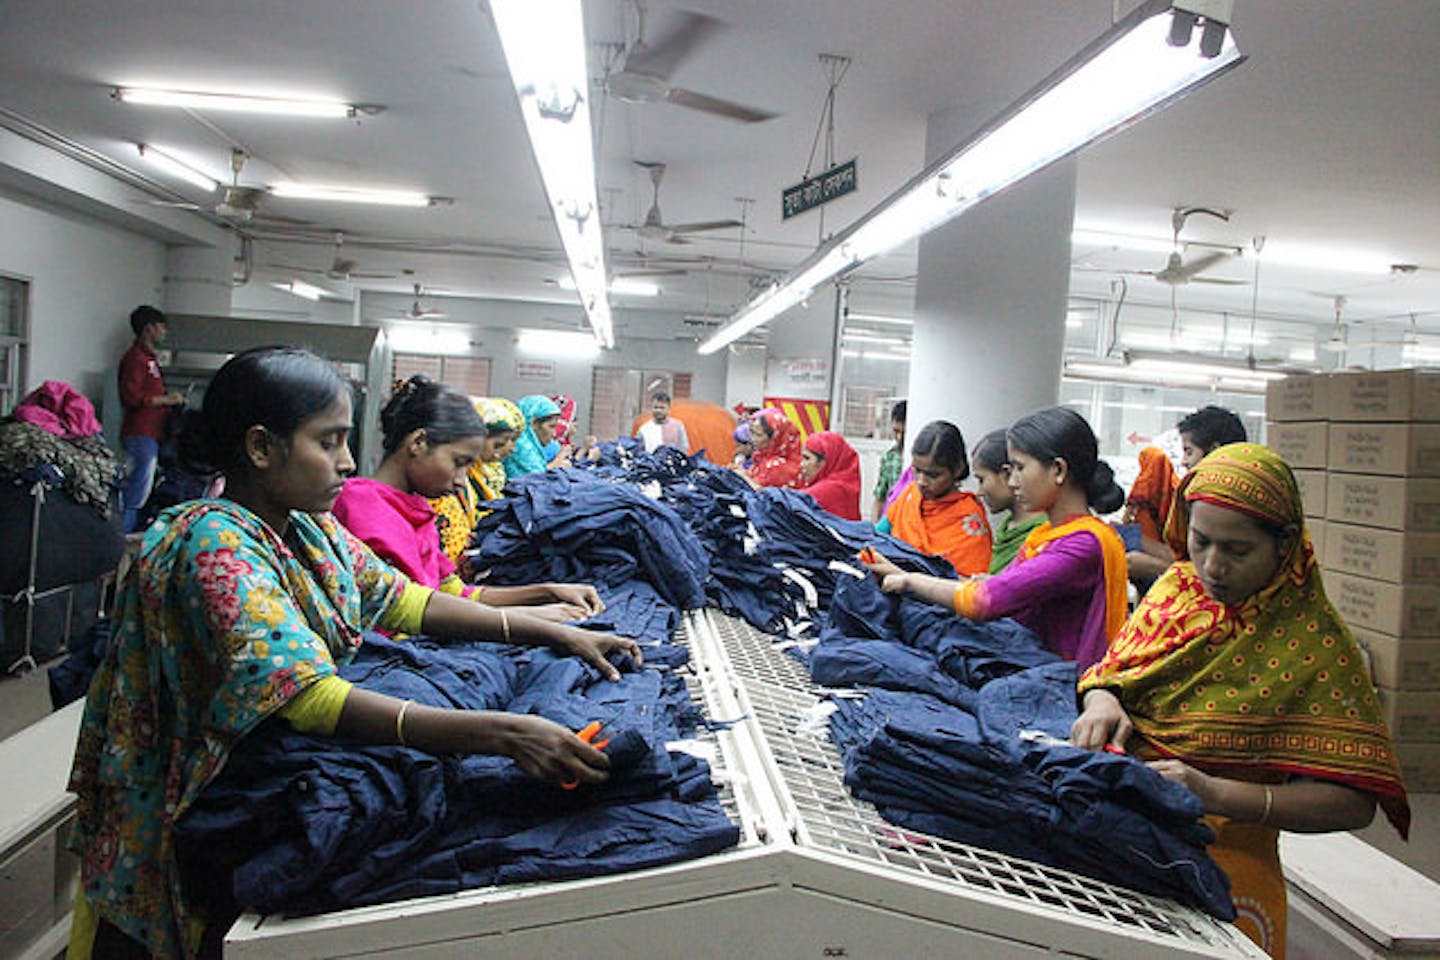 garment workers in bangladesh